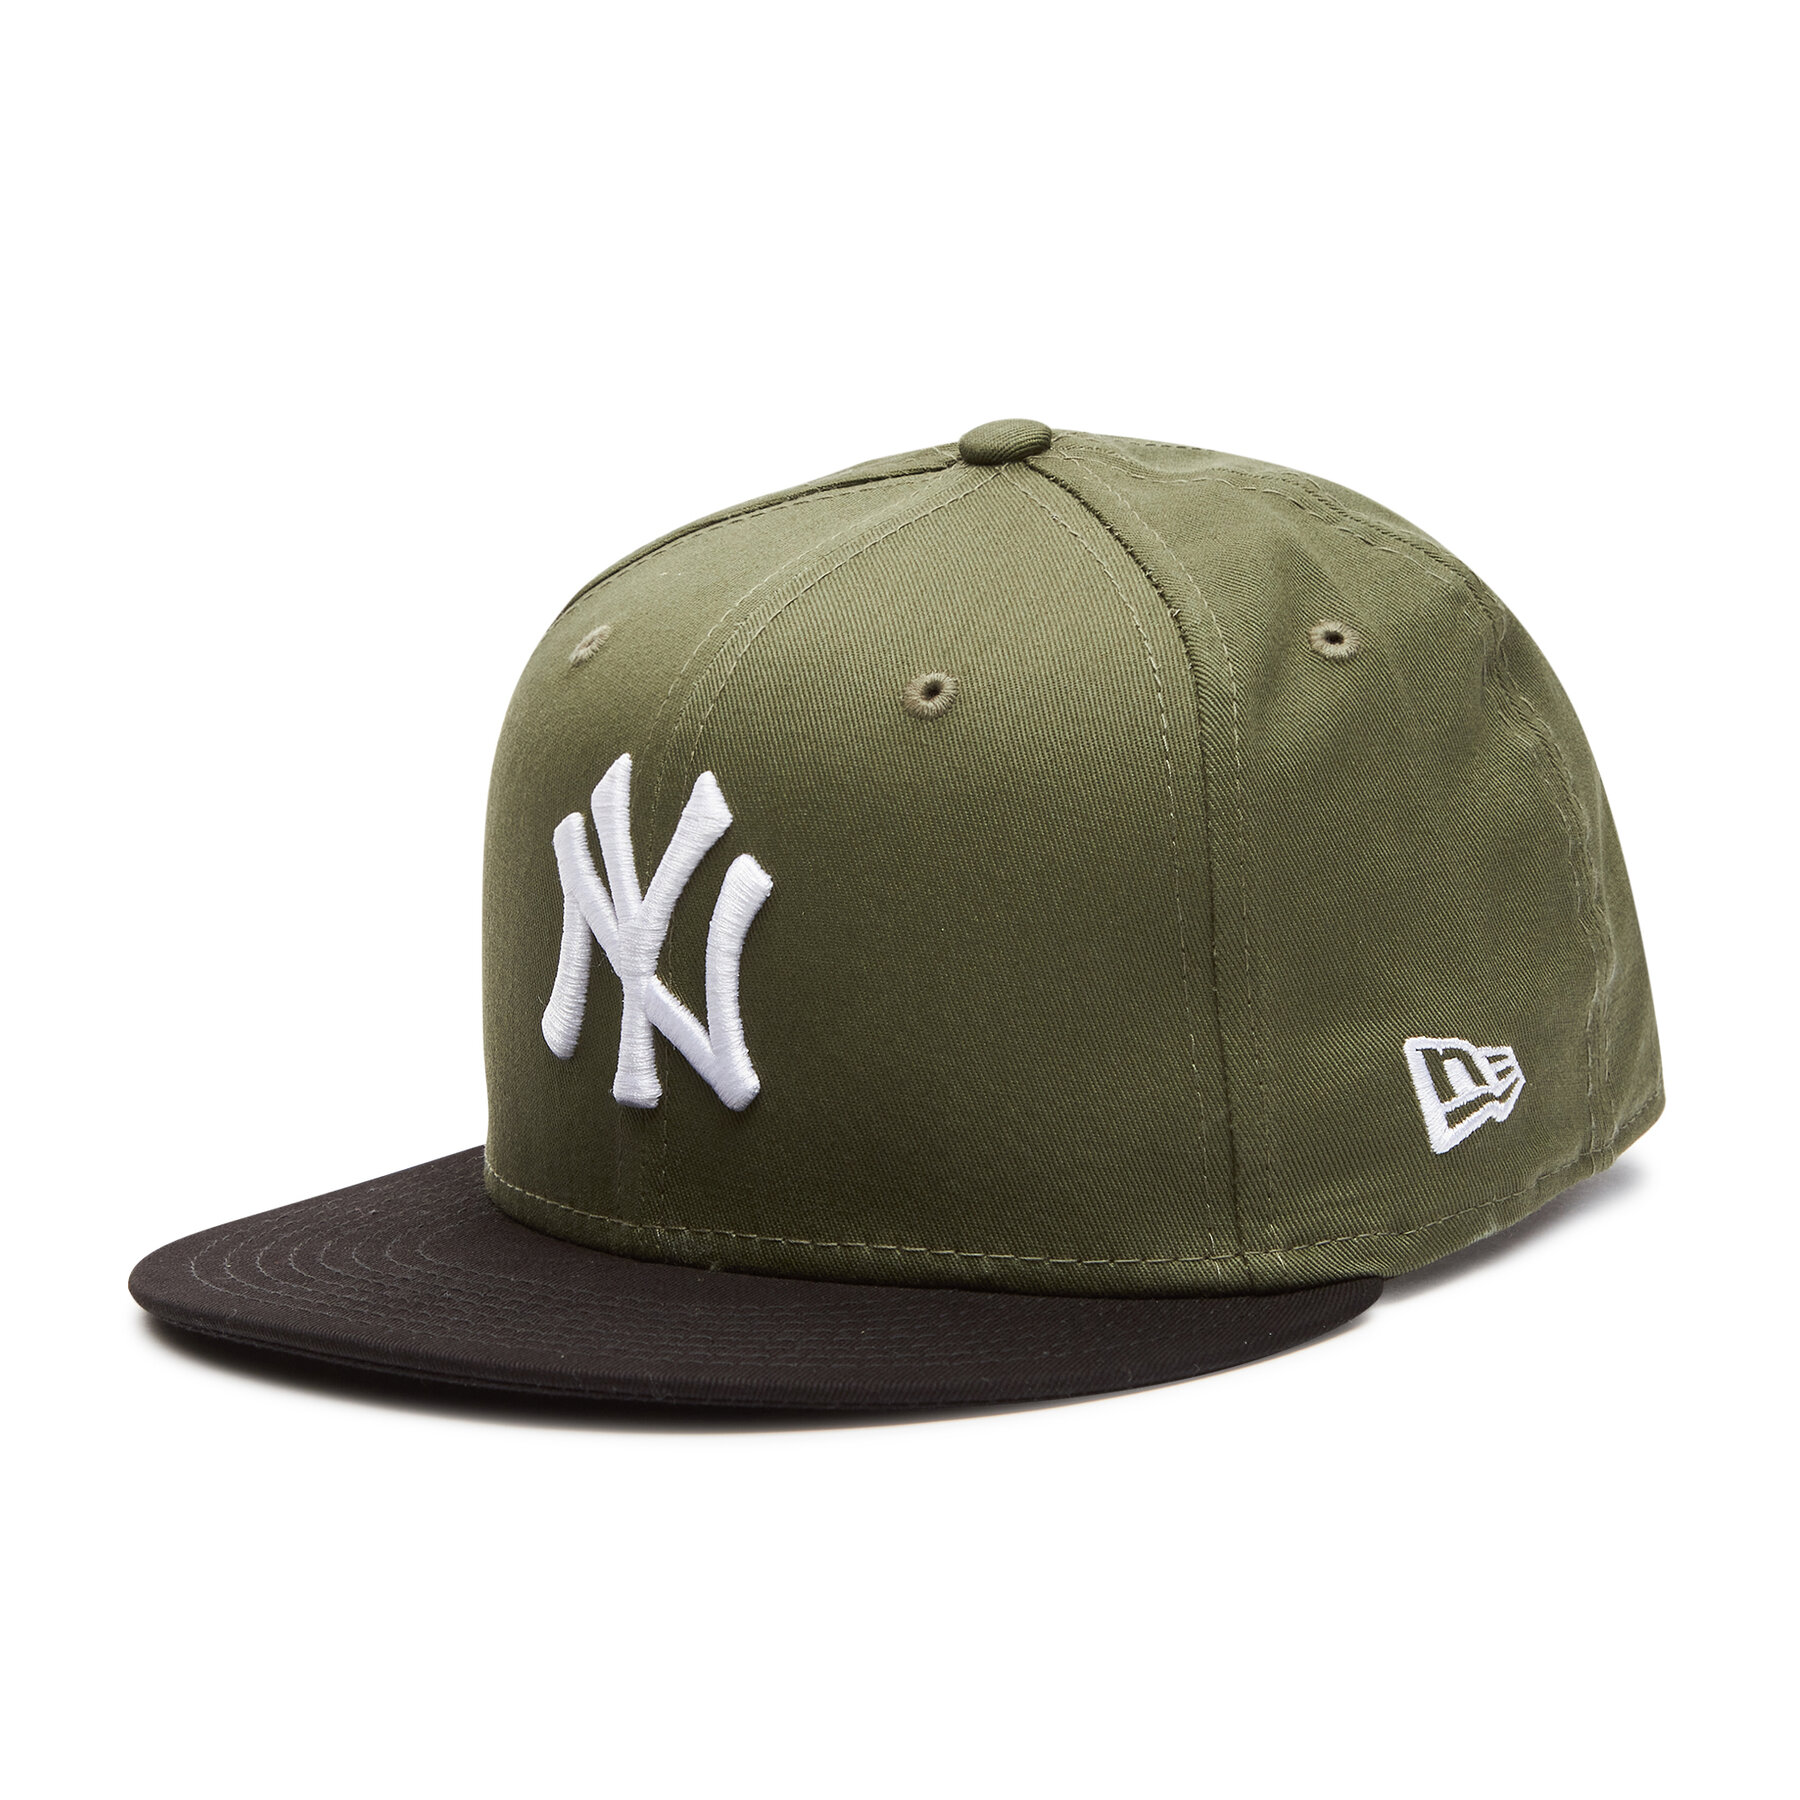 Comprar en oferta New Era 9Fifty New York Yankees Cap olive-black